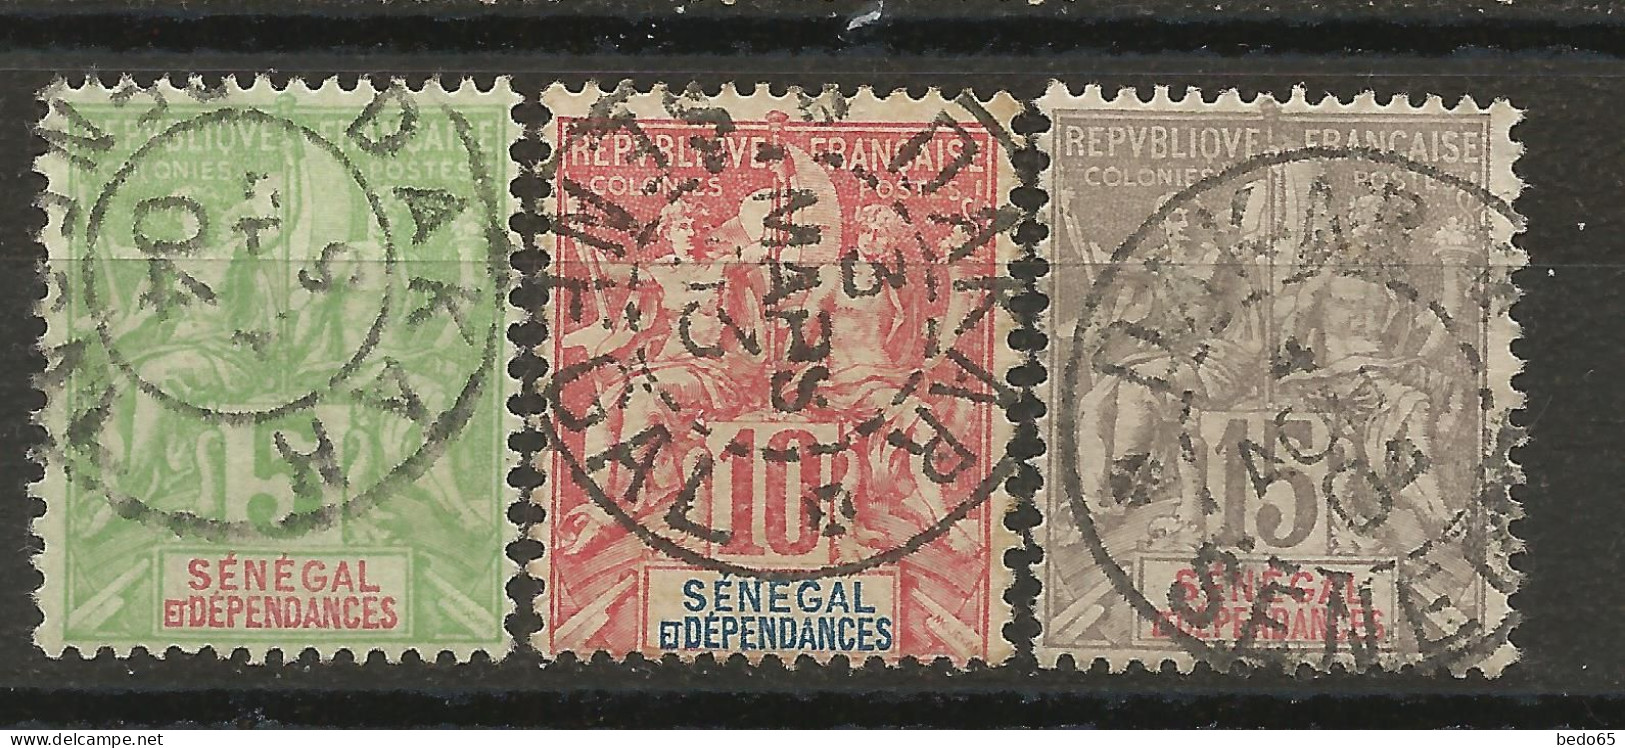 SENEGAL N° 21 à 23 CACHET DAKAR / Used - Used Stamps